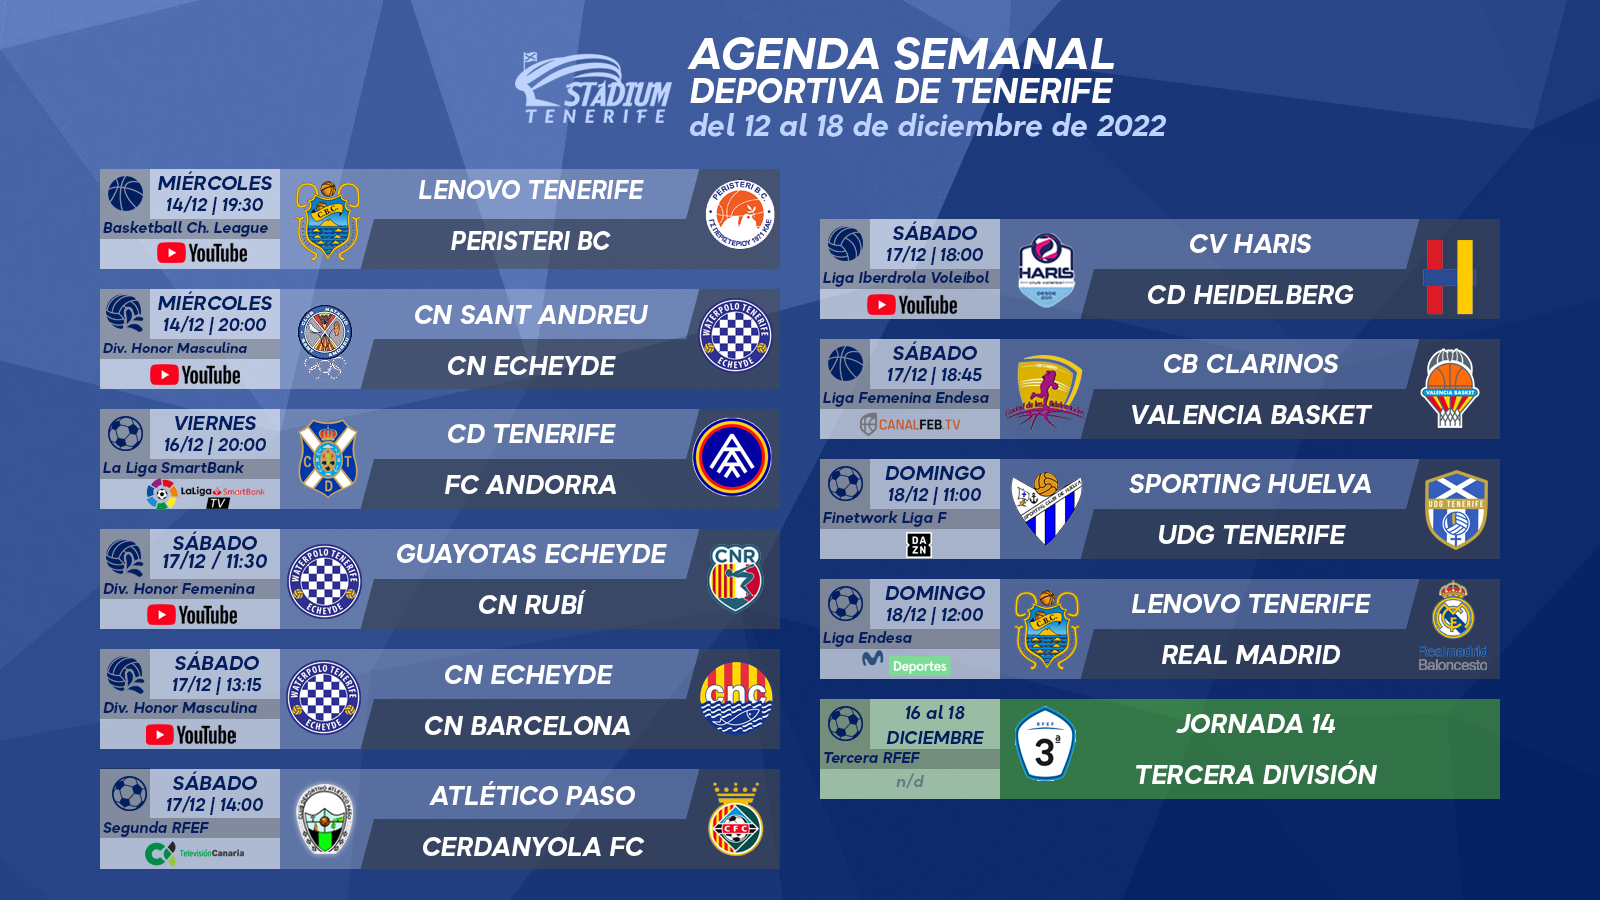 Agenda Semanal Deportiva de Tenerife (12 al 18 de diciembre)